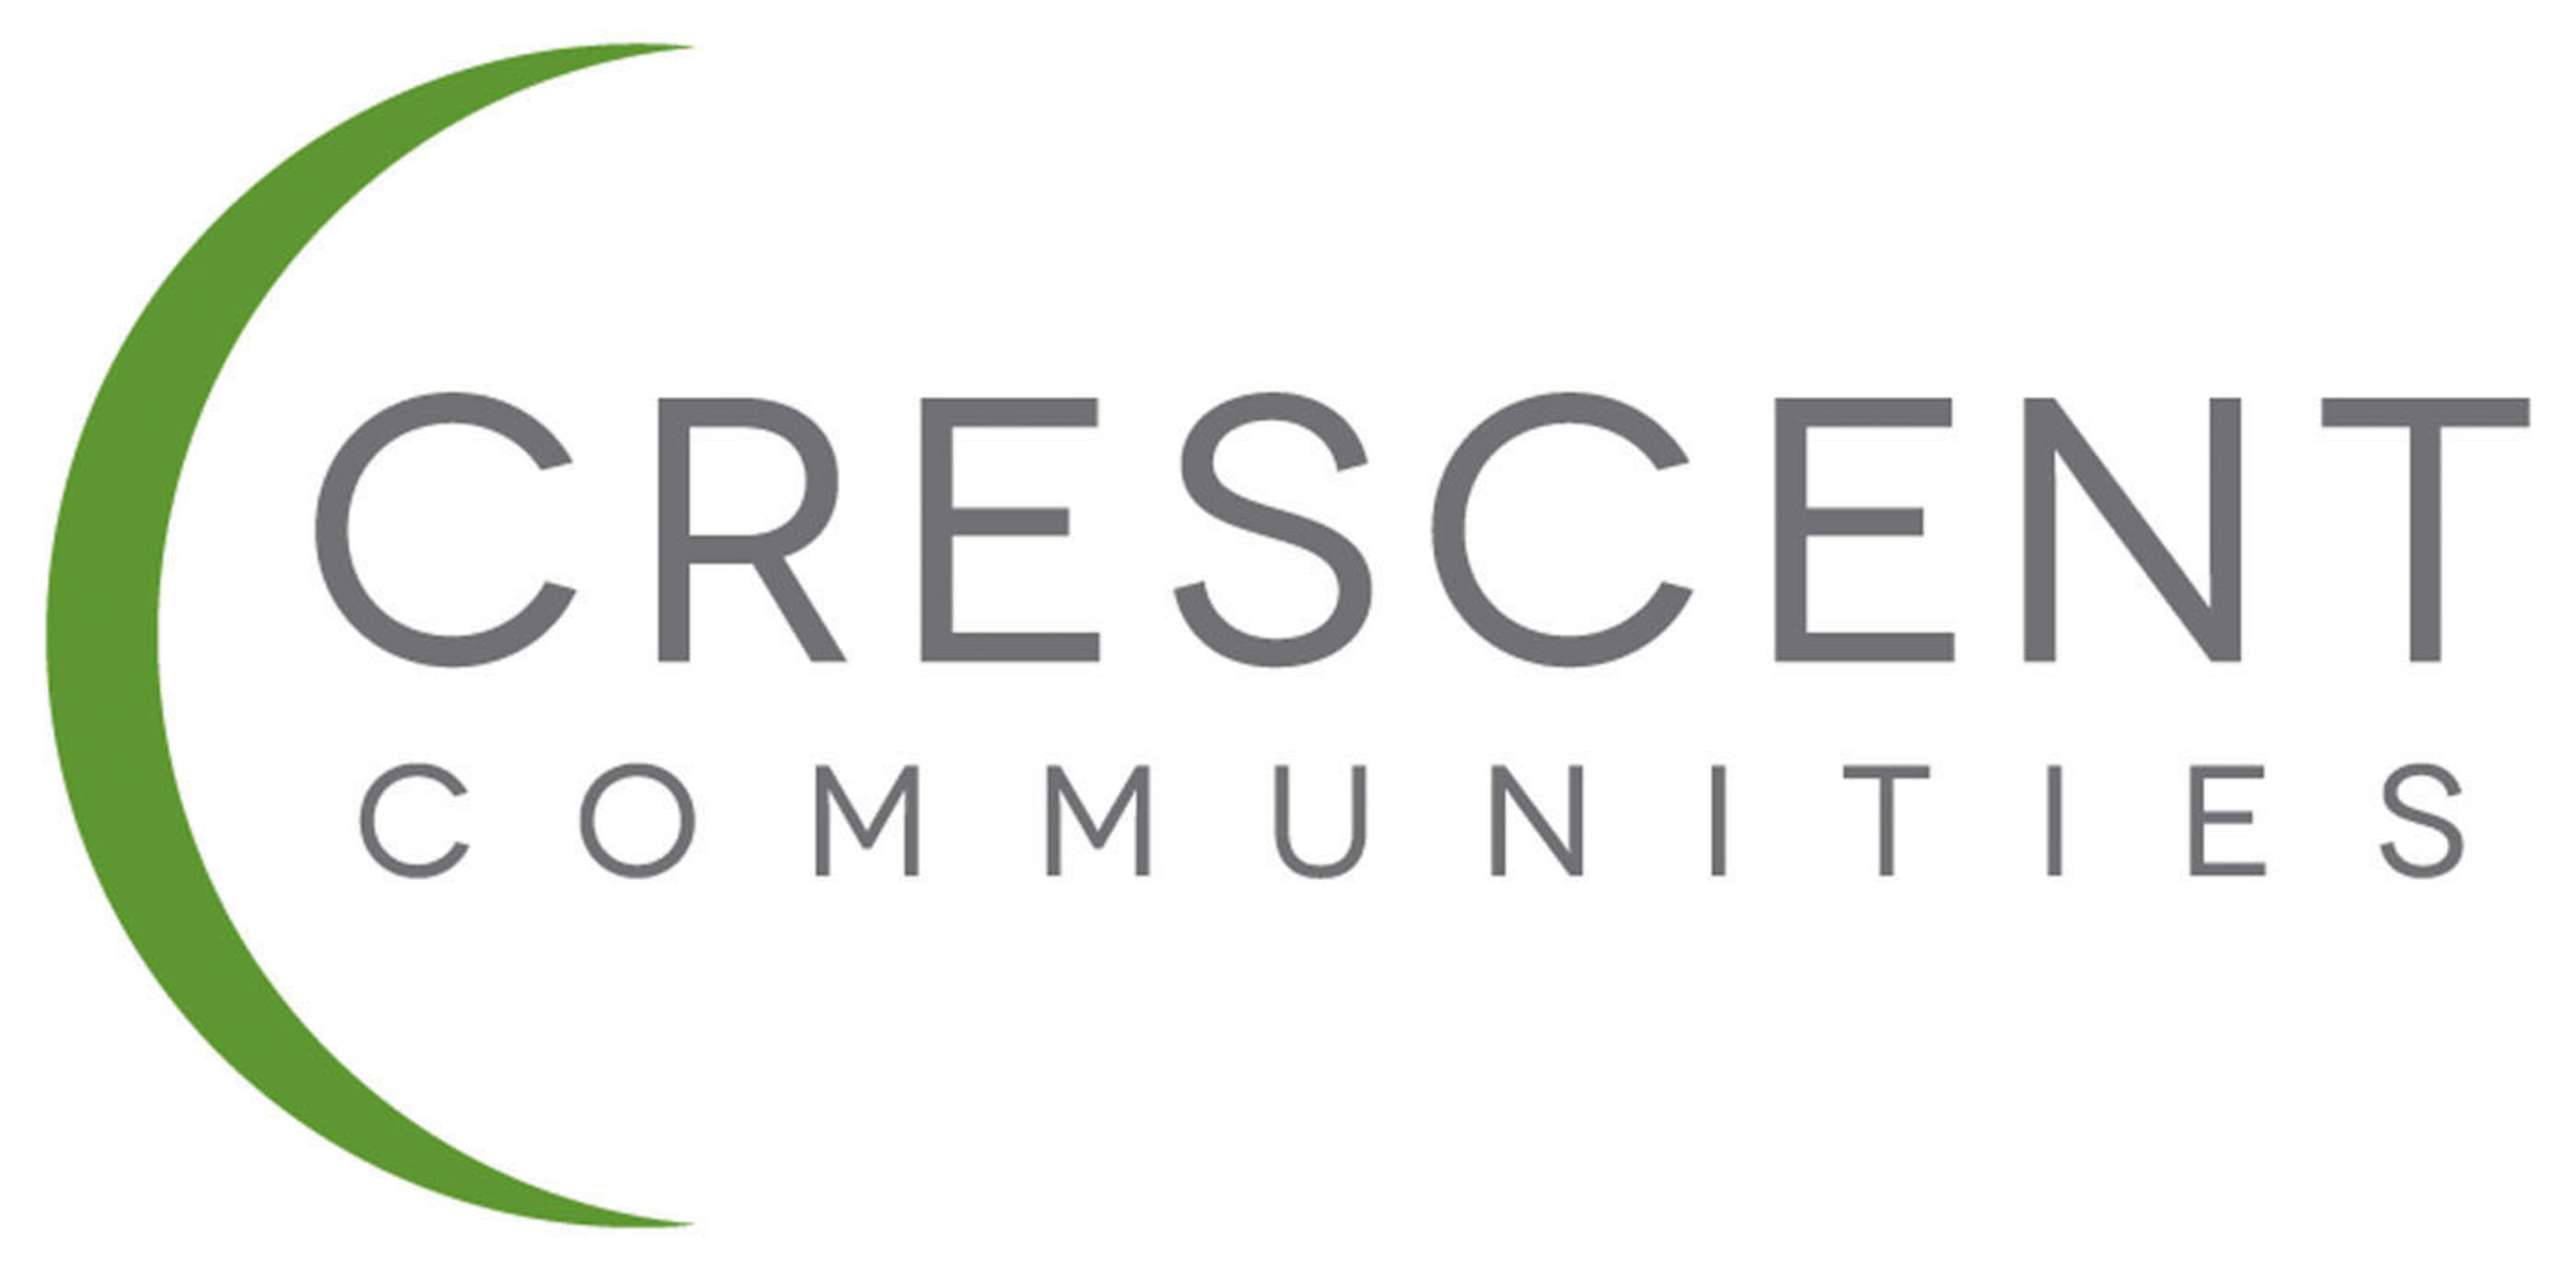 Crescent Communities logo. (PRNewsFoto/Crescent Communities) (PRNewsFoto/)